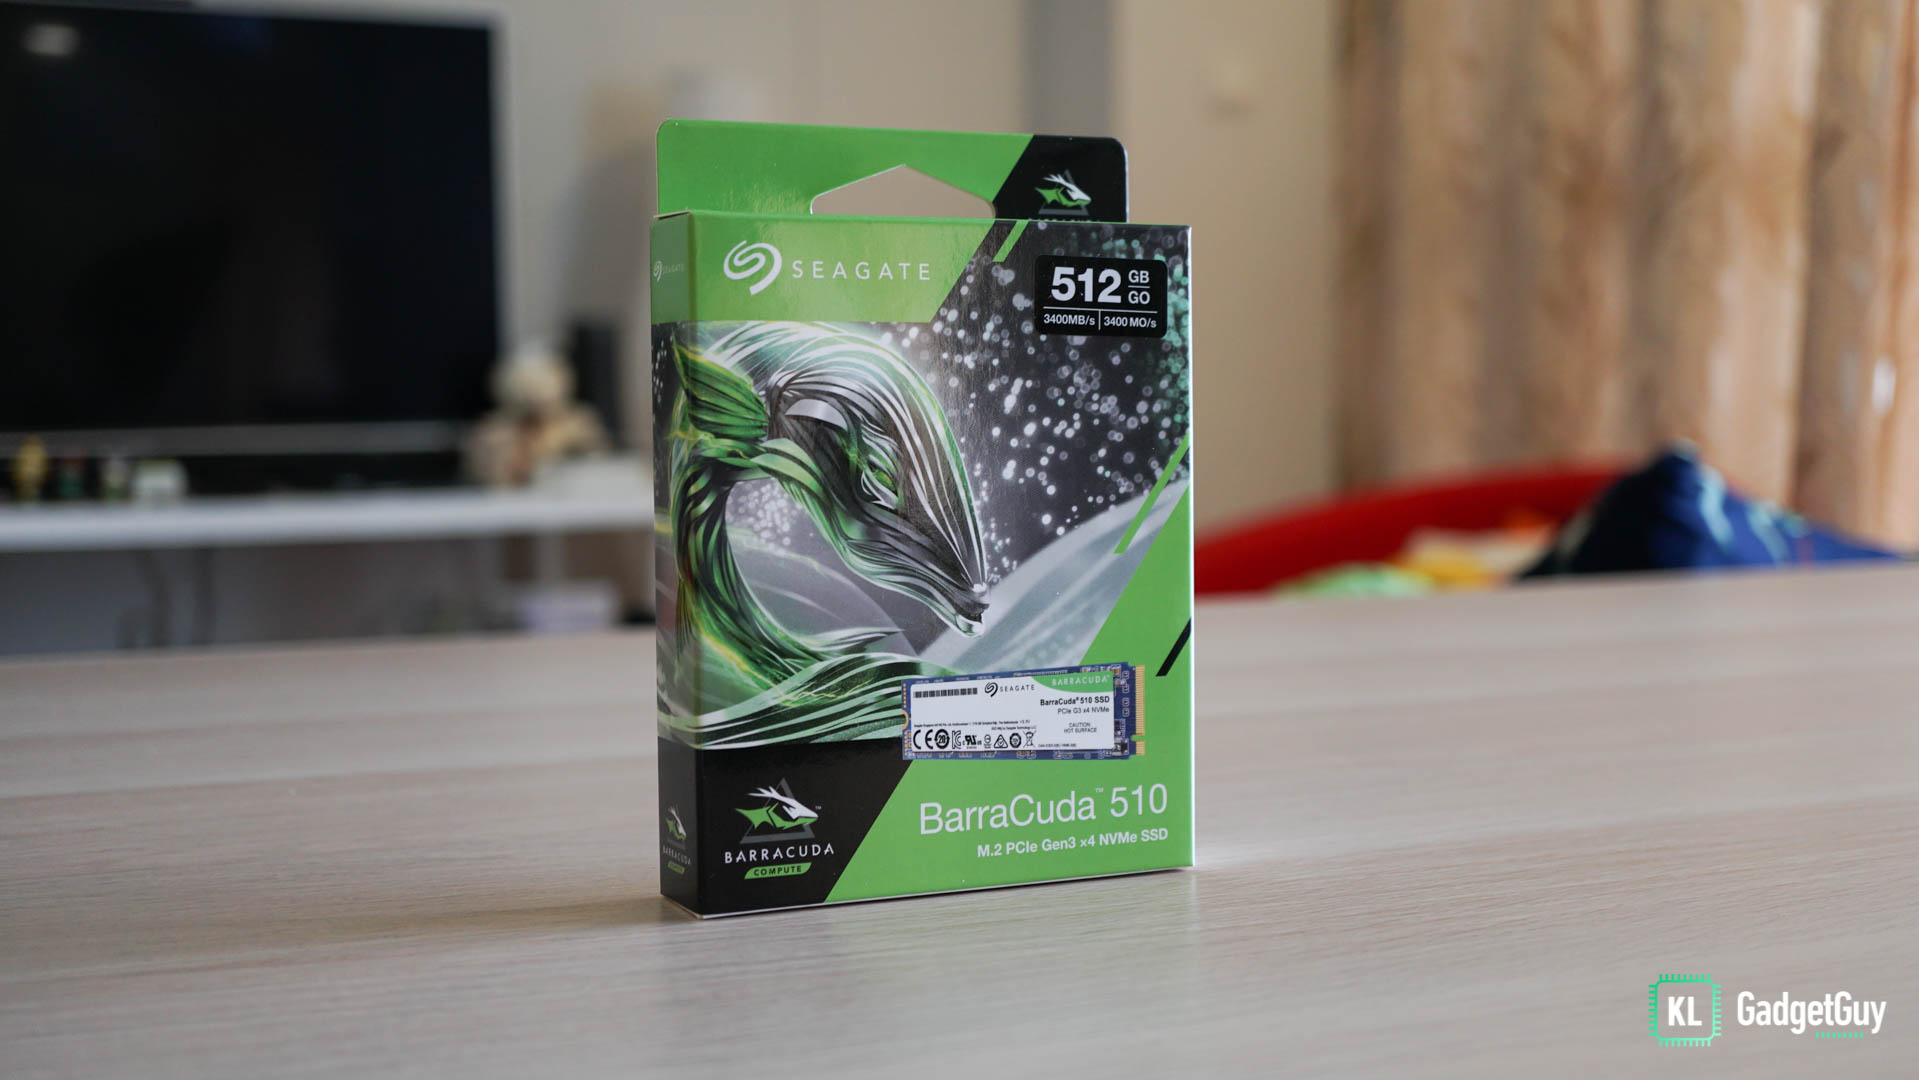 BarraCuda PCIe SSD